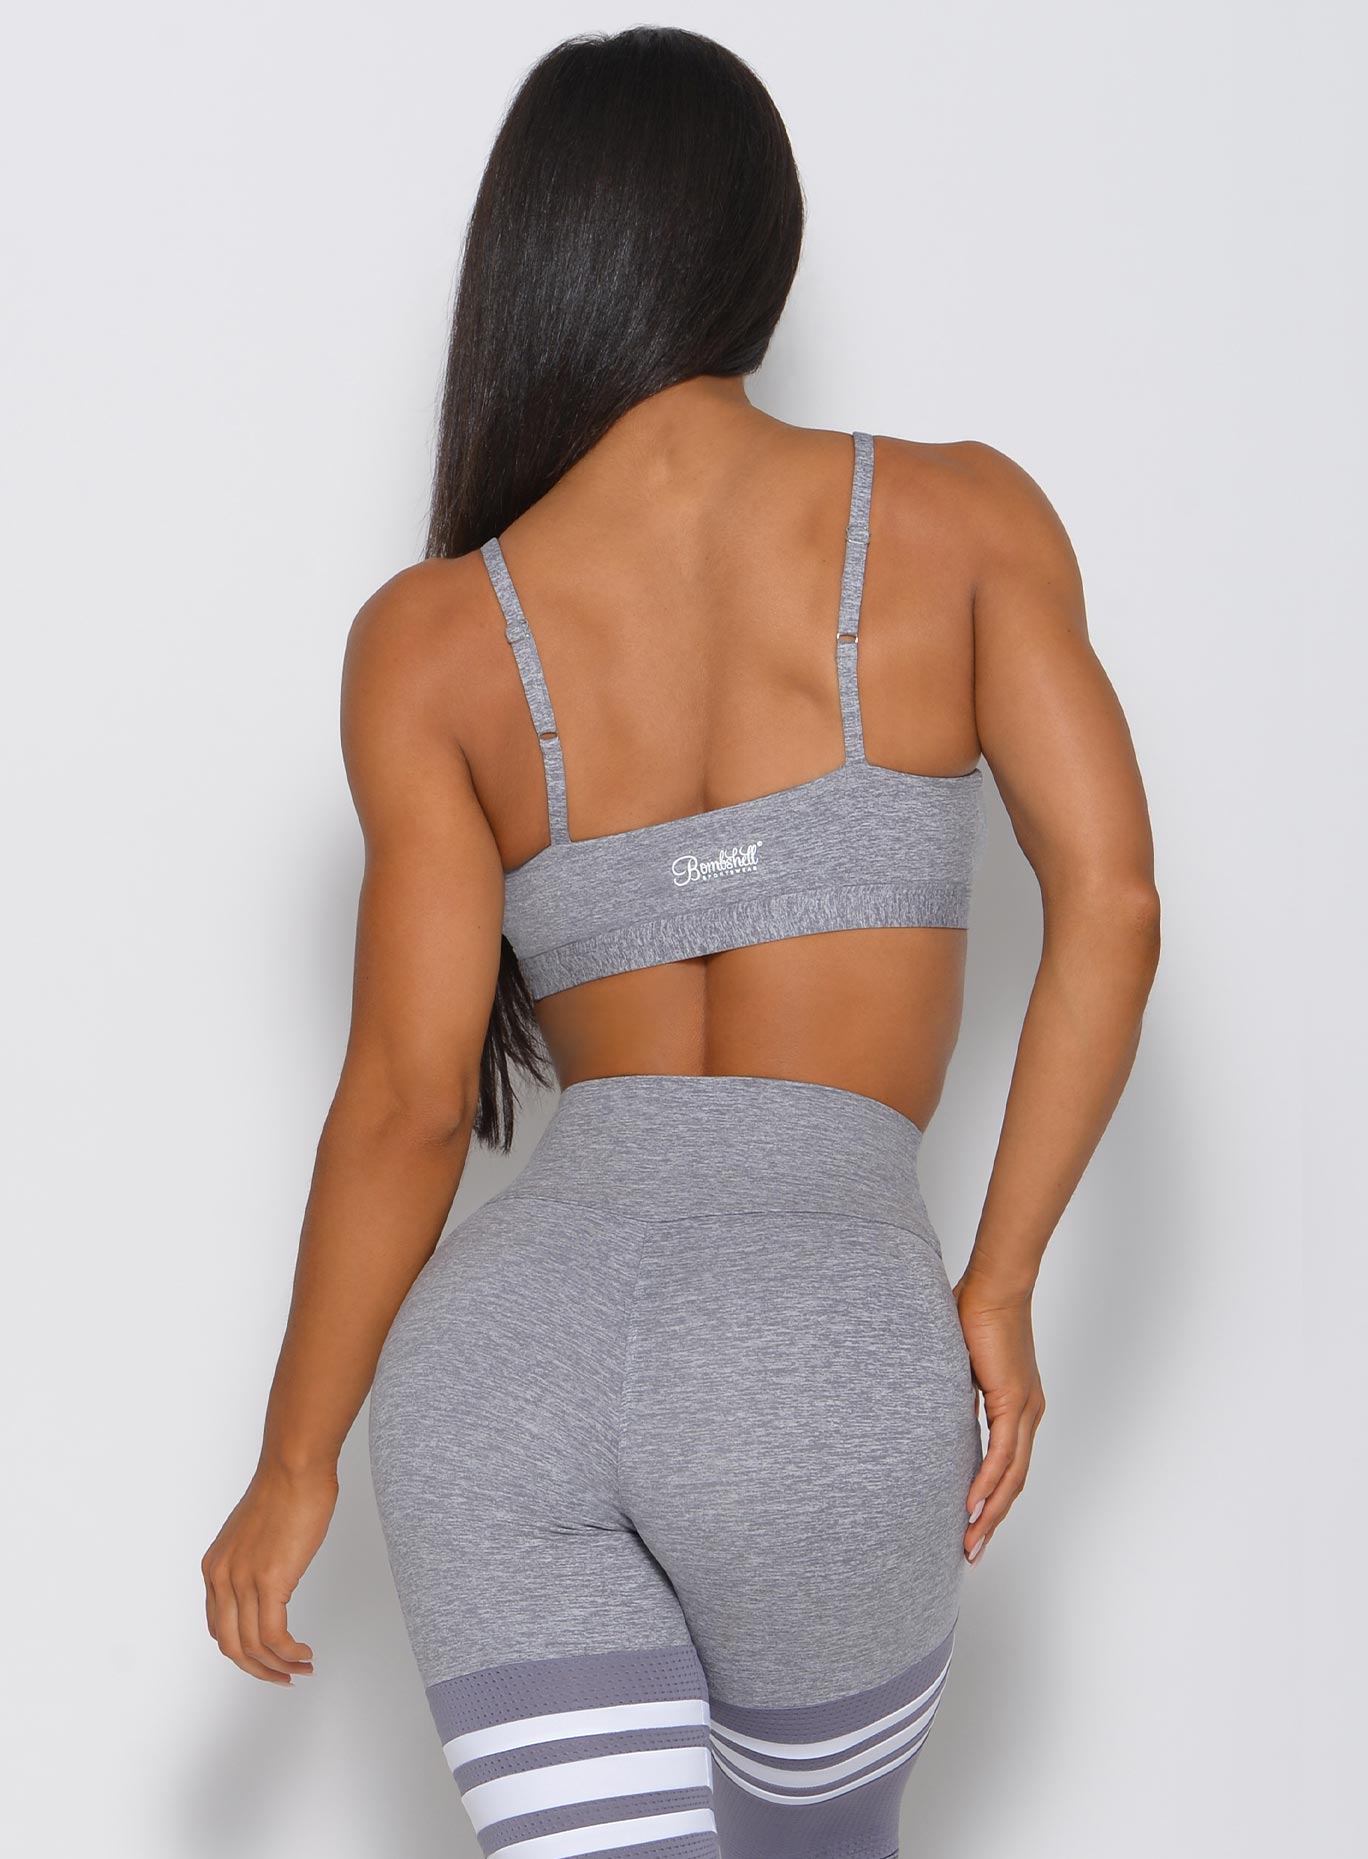 Back photo of model wearing grey sports bra and matching bottoms 